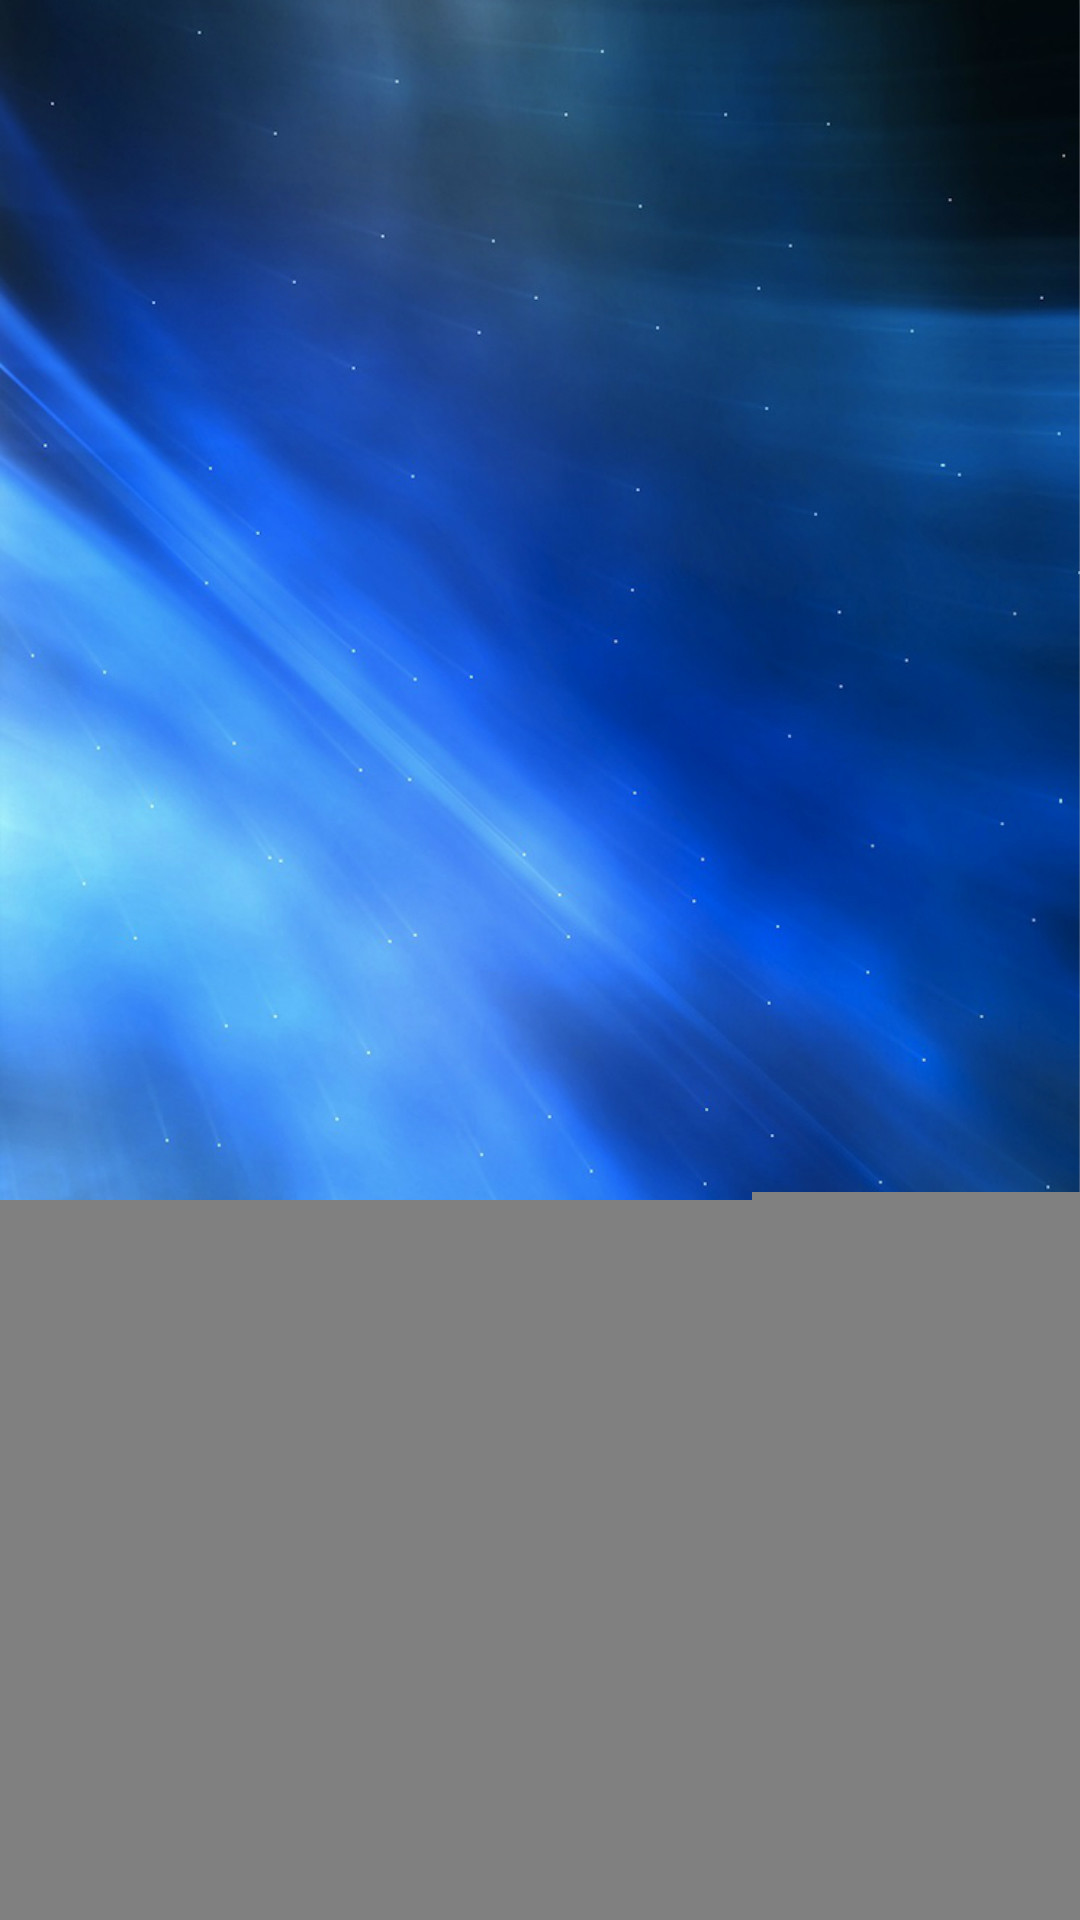 1080x1920 Abstract Blue Smoke Light Swirl Background iPhone 8 wallpaper